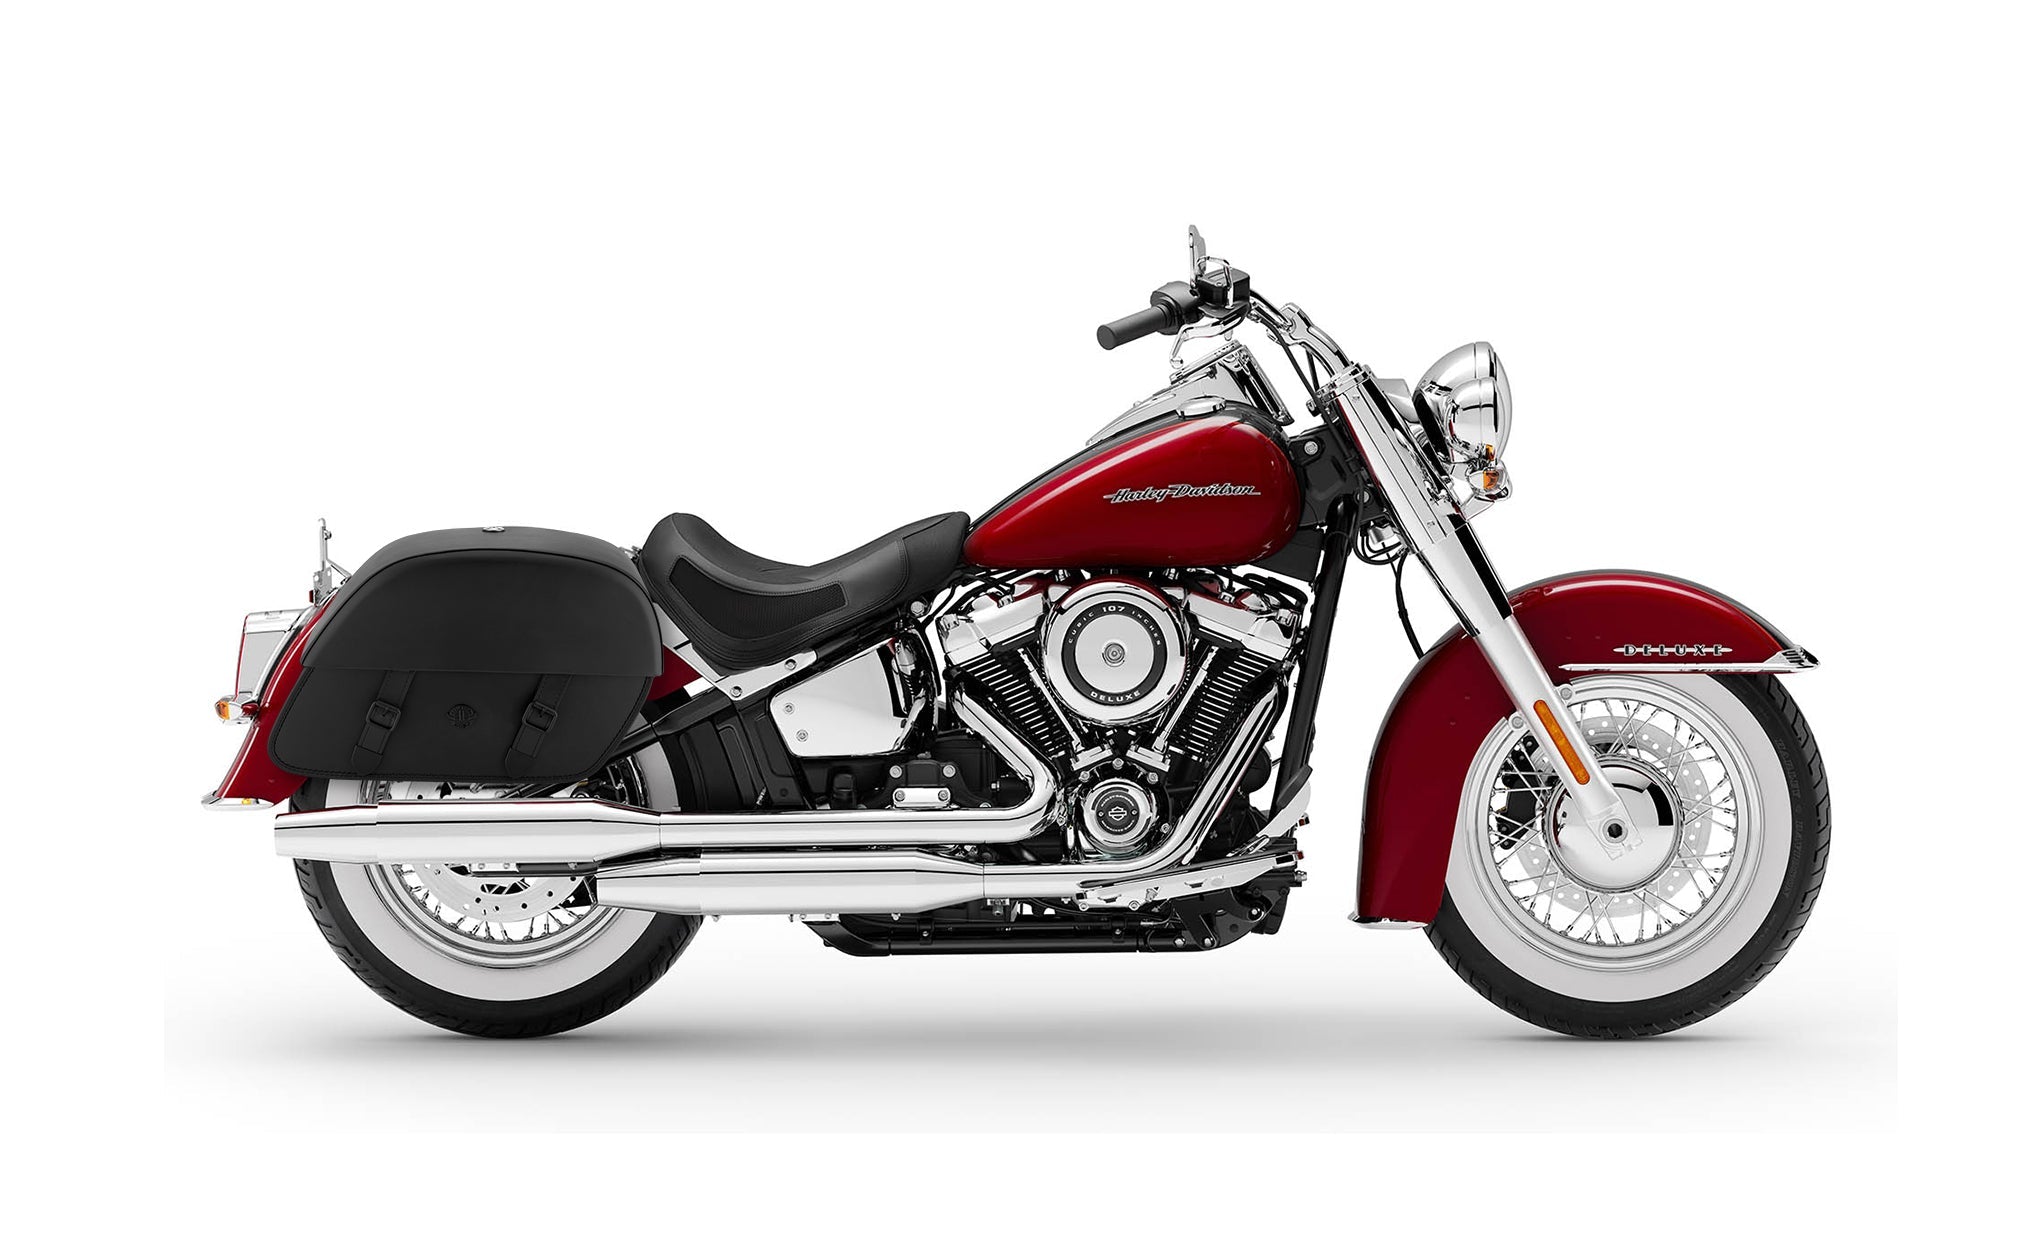 Viking Baelor Large Leather Motorcycle Saddlebags For Harley Davidson Softail Deluxe Flstn I on Bike Photo @expand